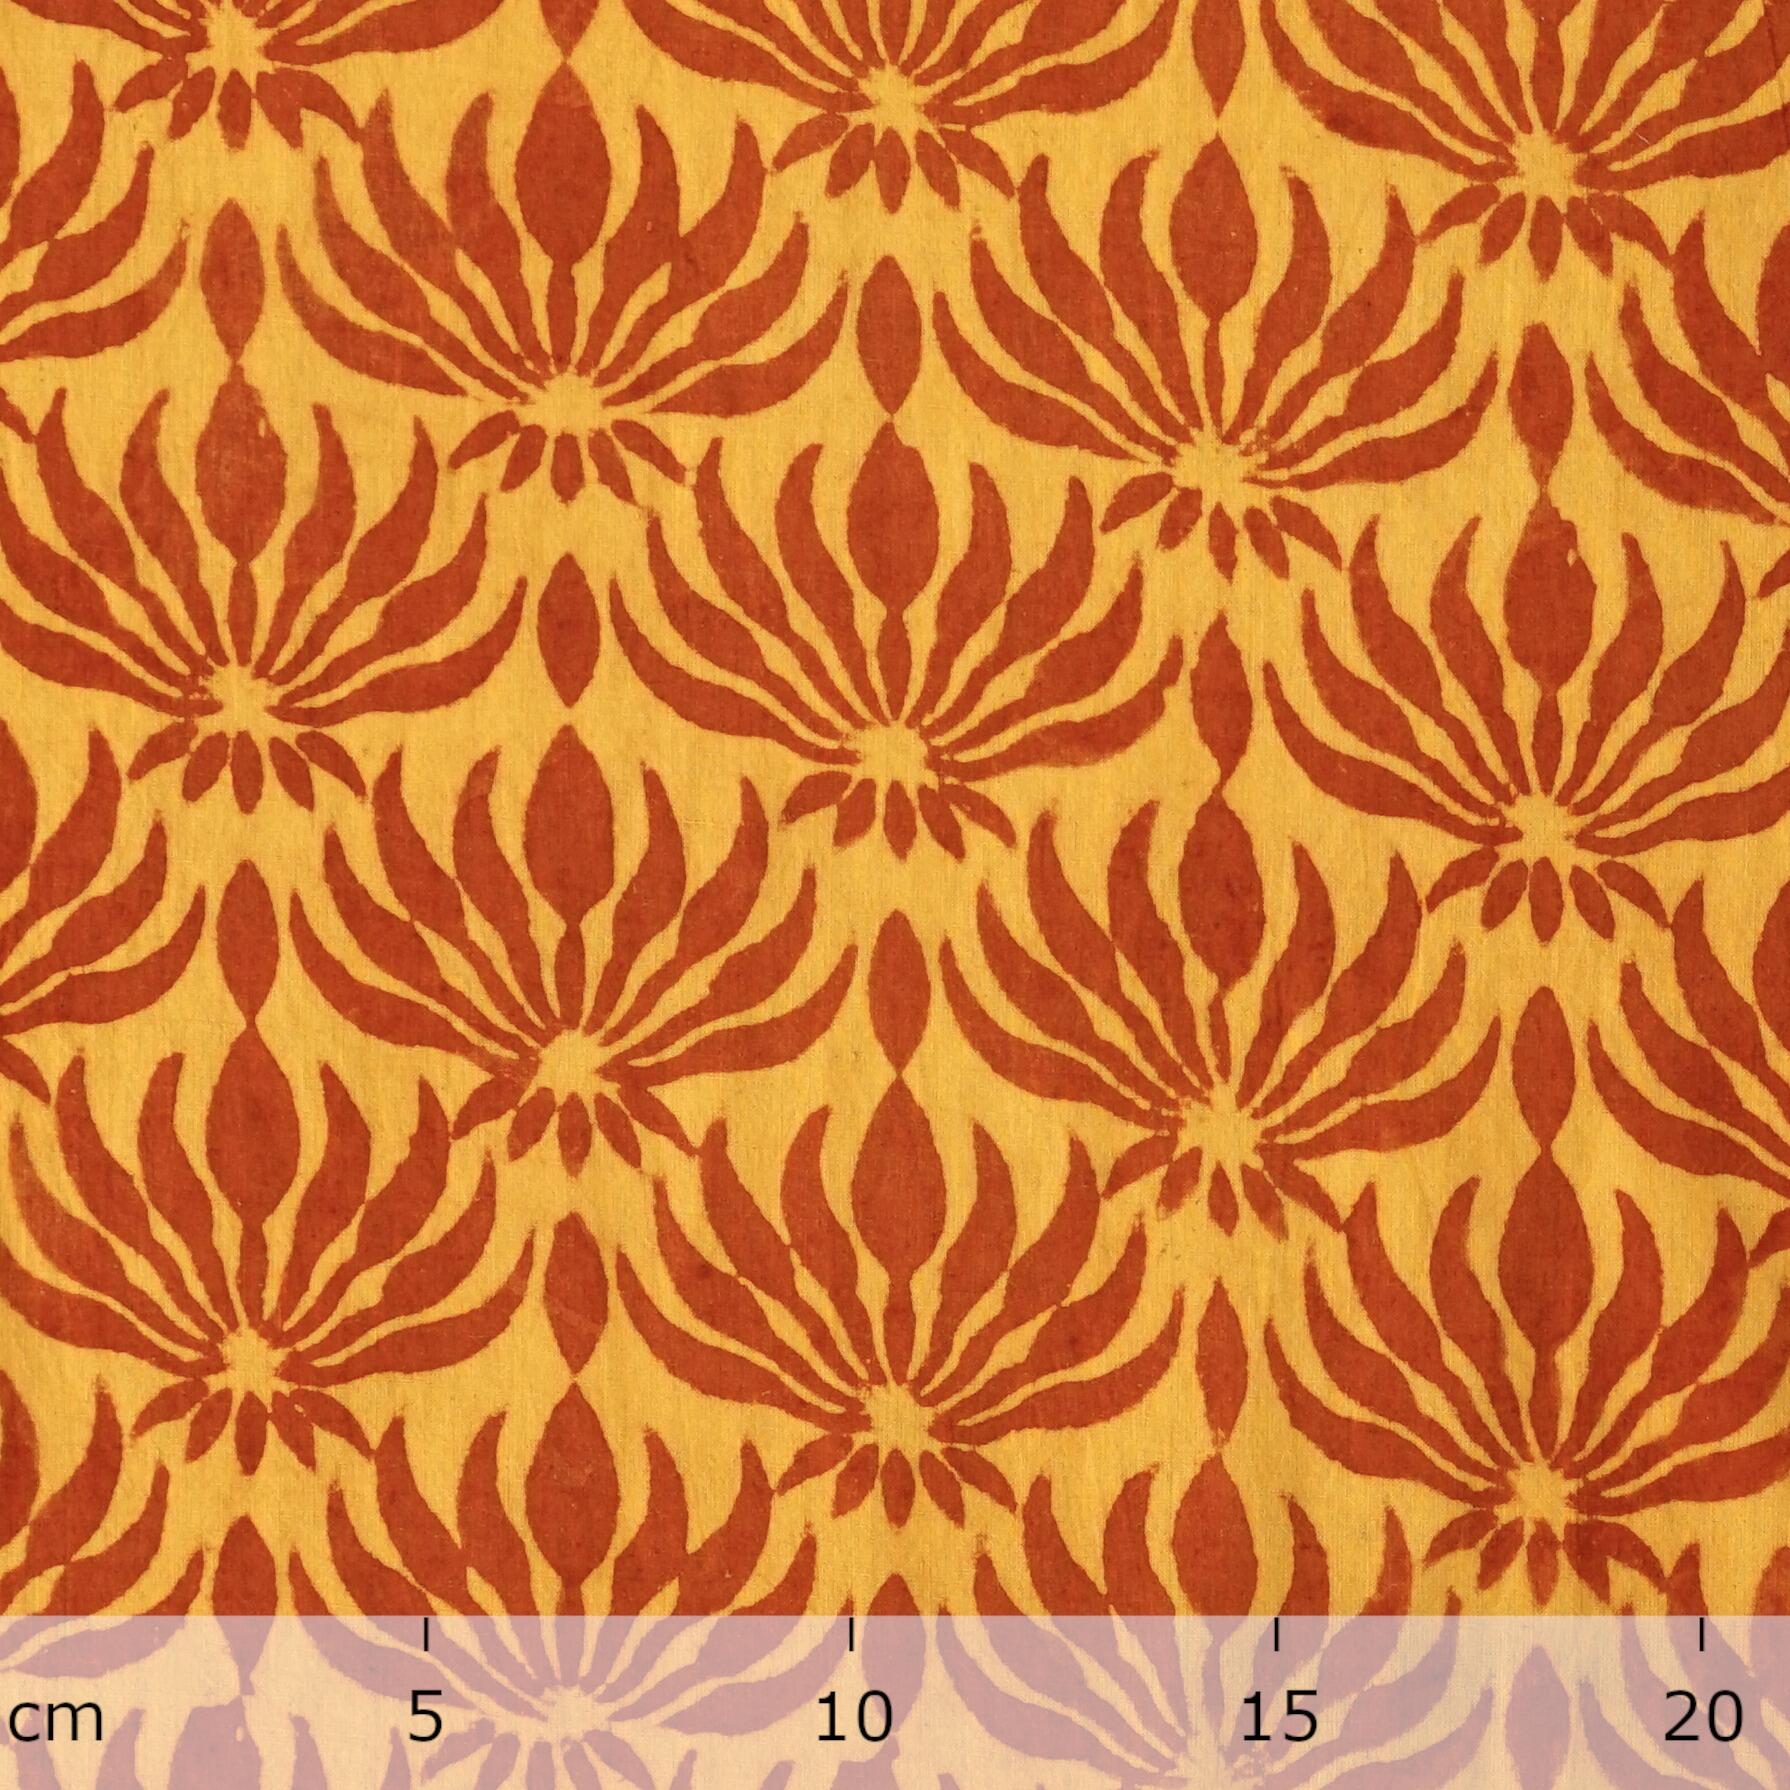 4 - AHM01 - 100% Block-Printed Cotton Fabric from India - Ajrak - Alizarin Maroon Lotus Flower, Turmeric Yellow Spray Print - Ruler